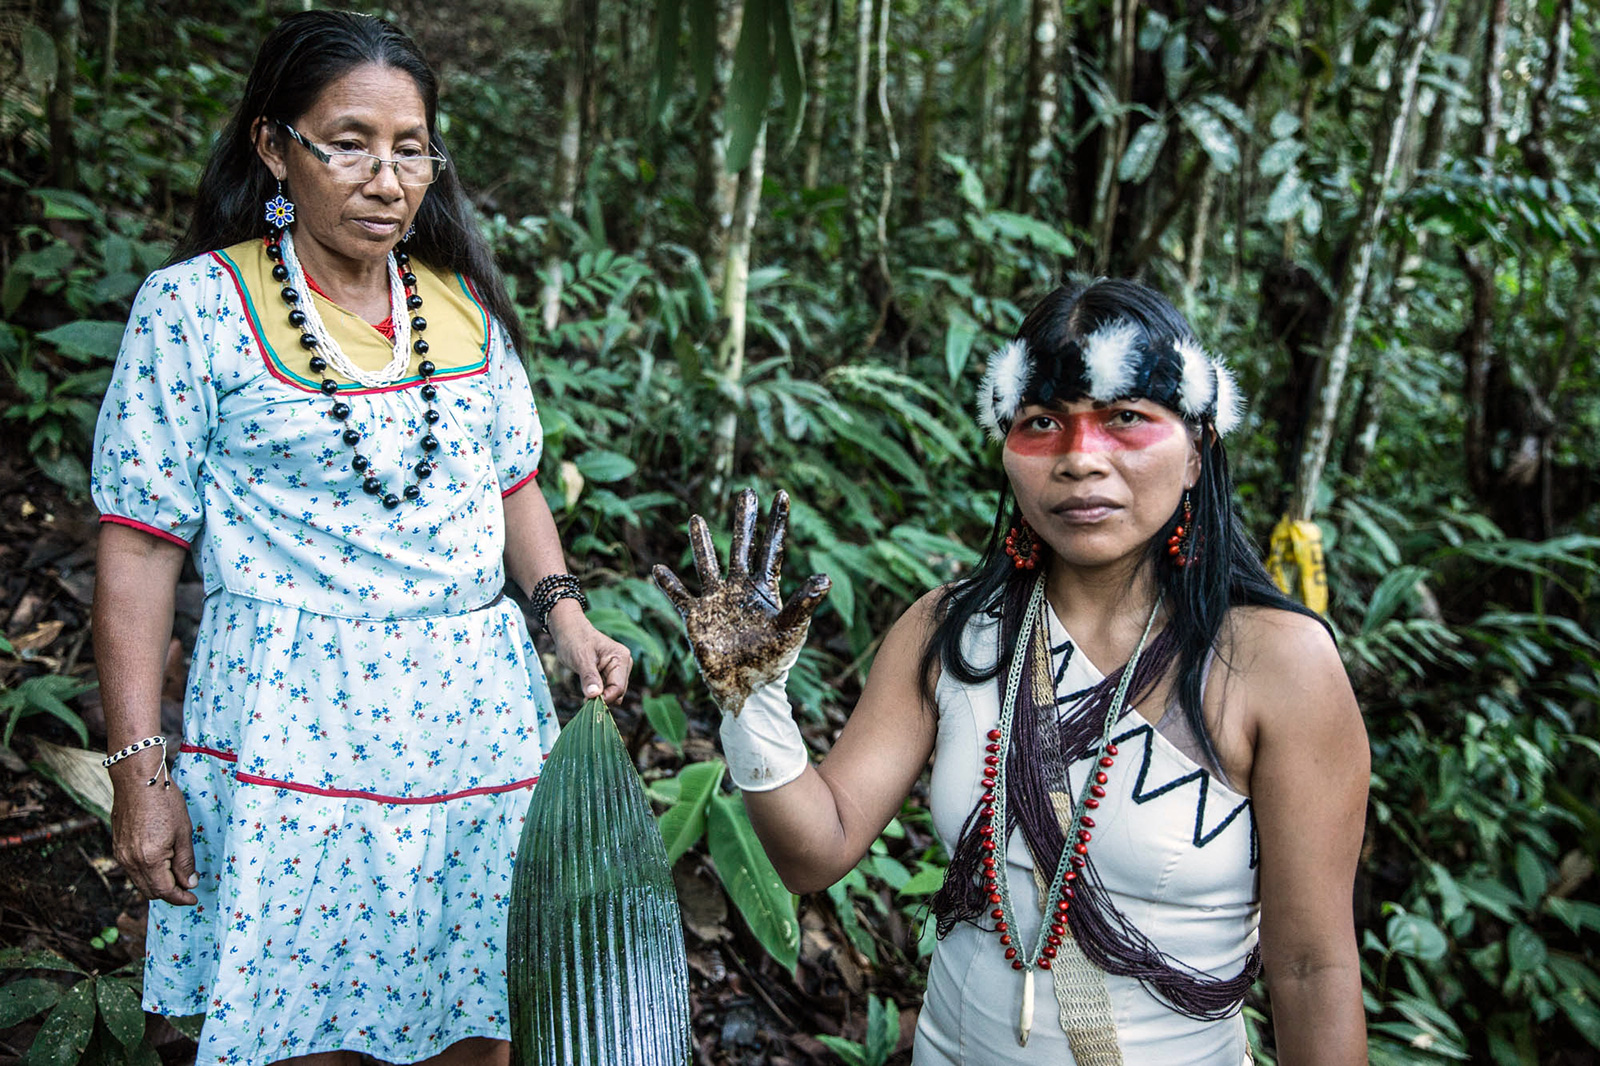 Waorani leader Nemonte Nenquimo shows evidence of oil contamination in the northern Ecuadorian Amazon rainforest.